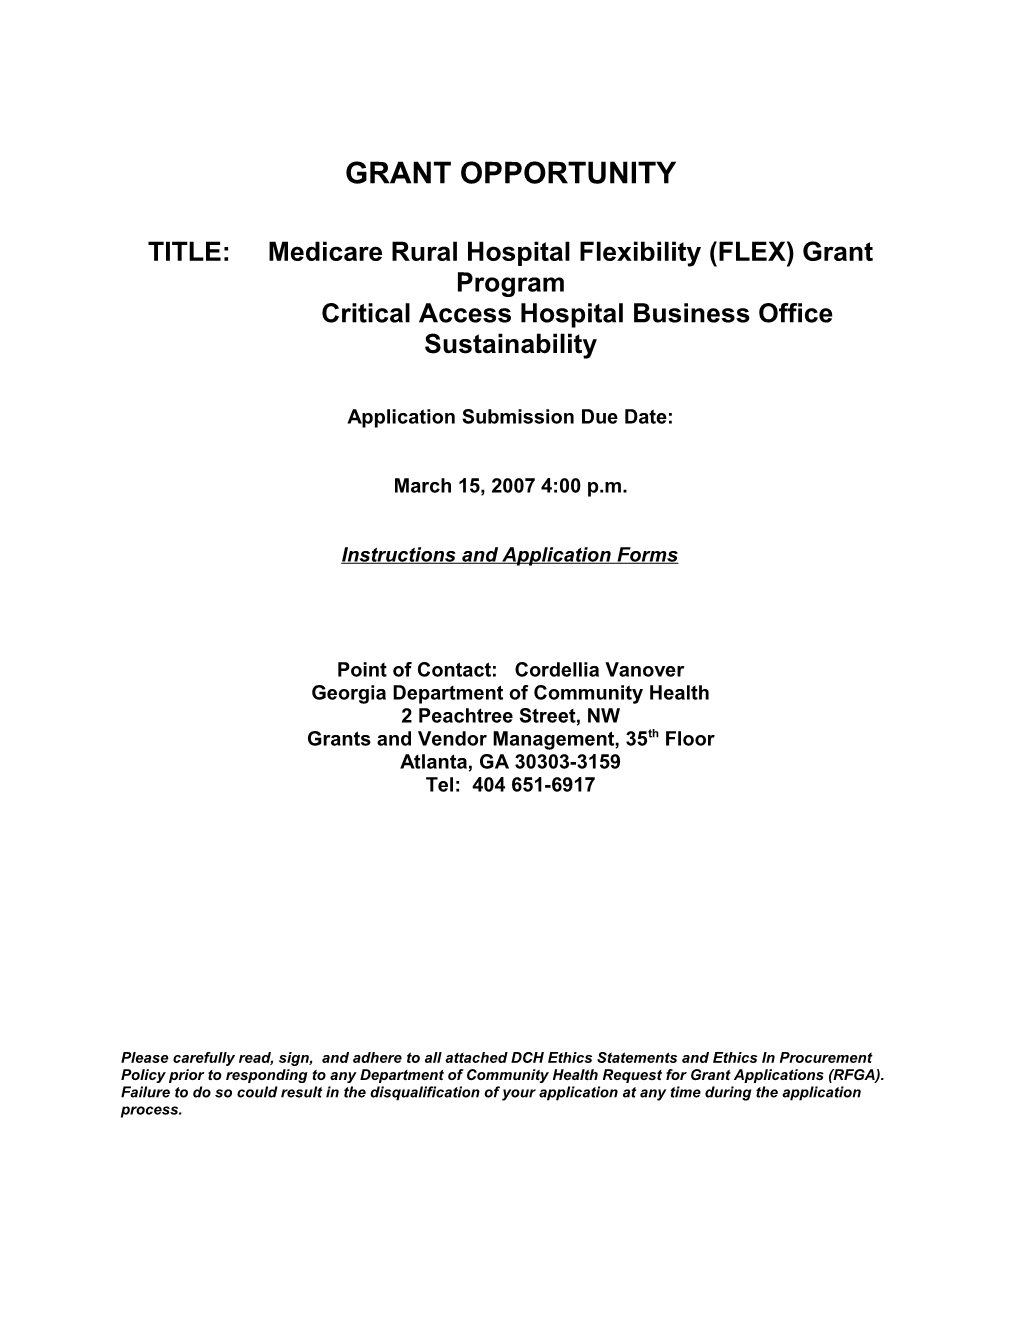 TITLE: Medicare Rural Hospital Flexibility (FLEX) Grant Program